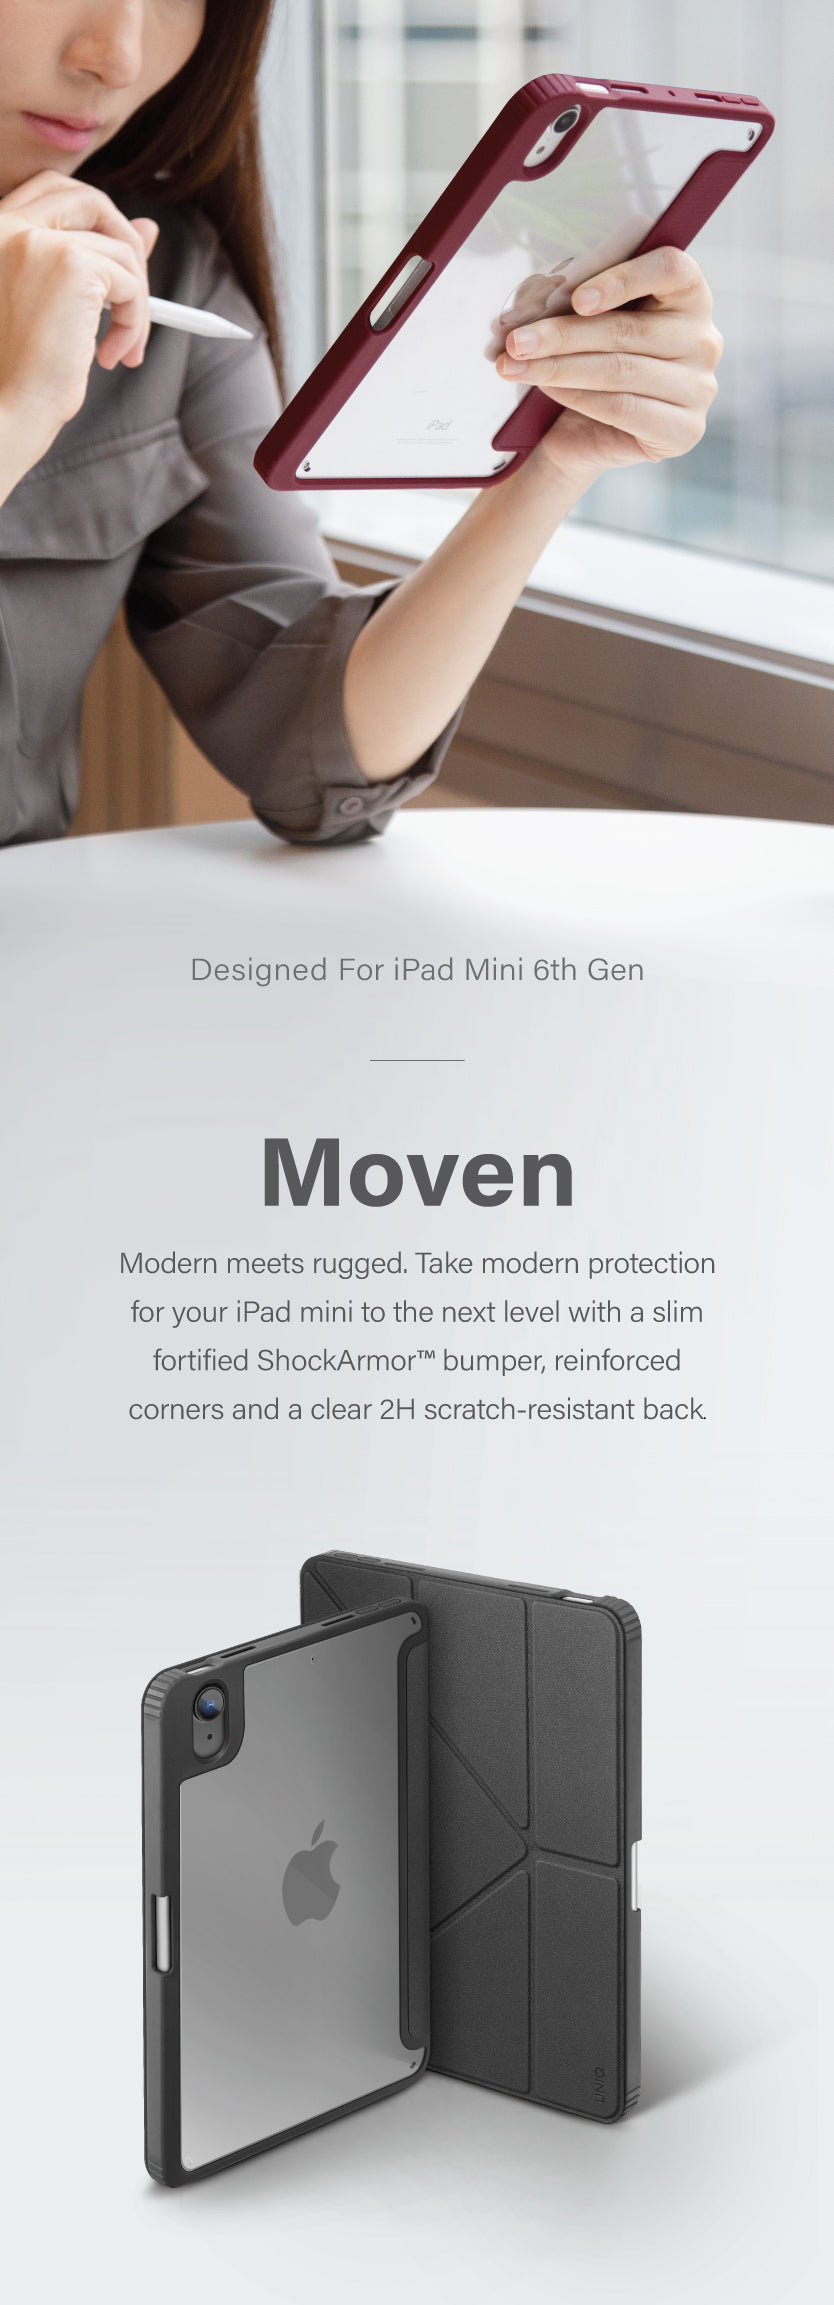 UNIQ Moven slim tough protective case for iPad mini with clear back and apple pencil holder